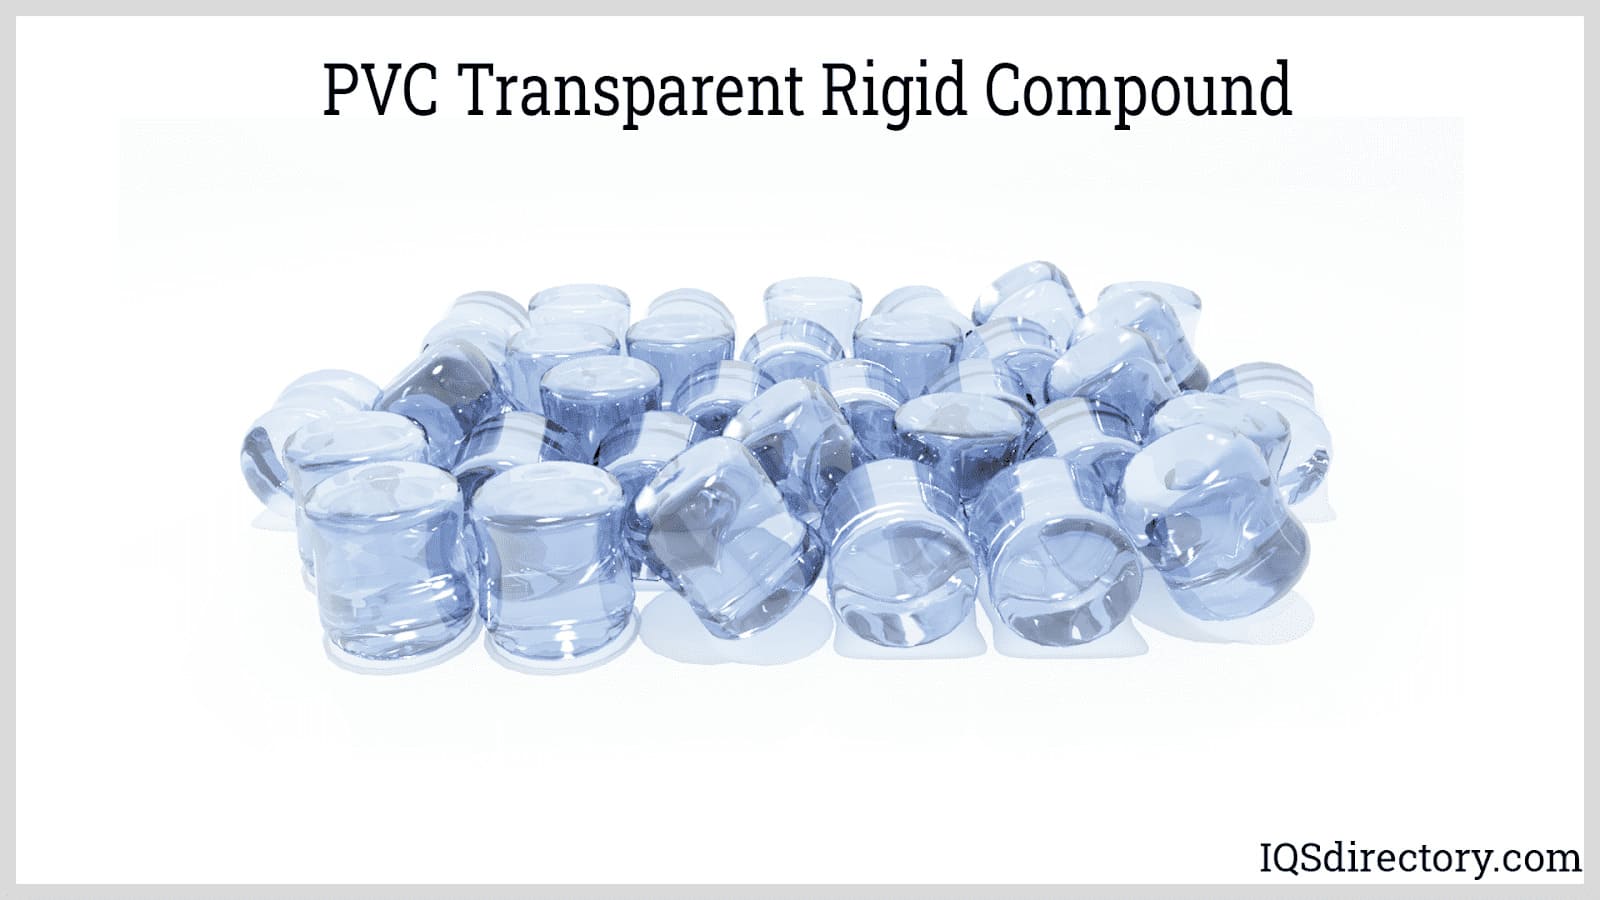 PVC Transparent Rigid Compound